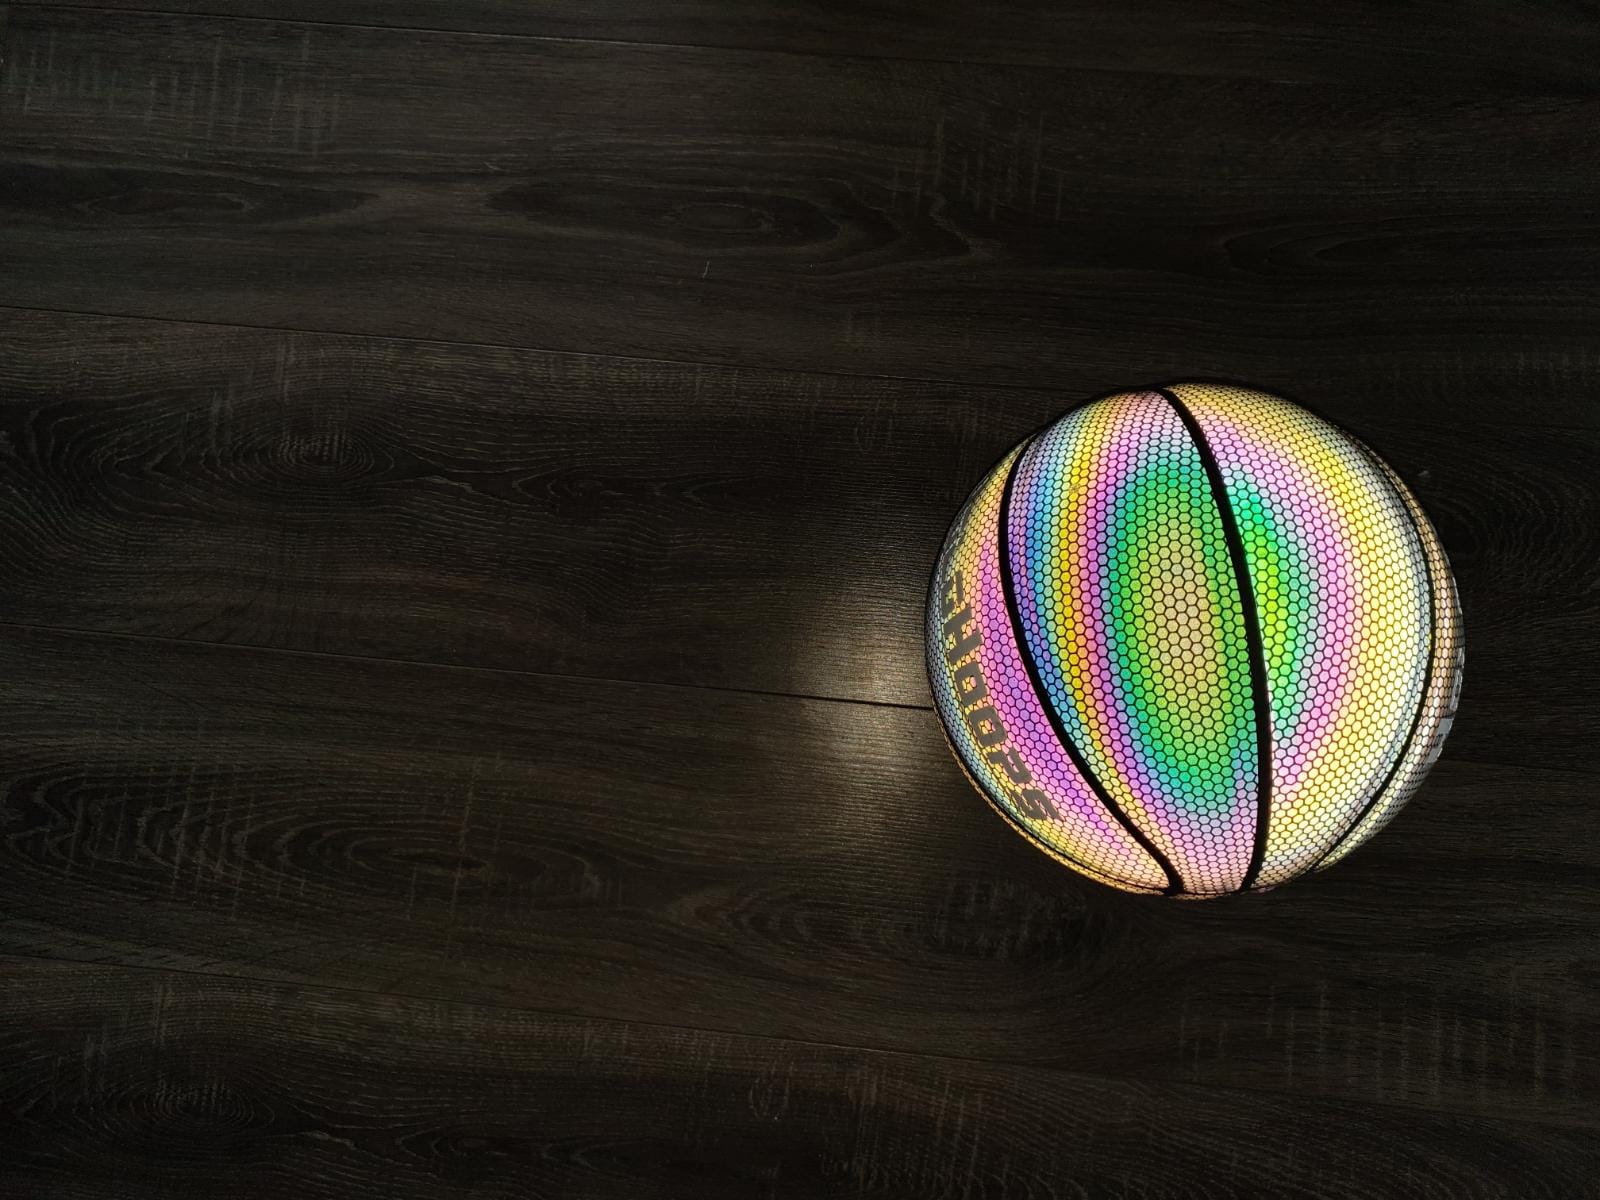 The Holographic Glowing Reflective Basketball - Epicbuzzer